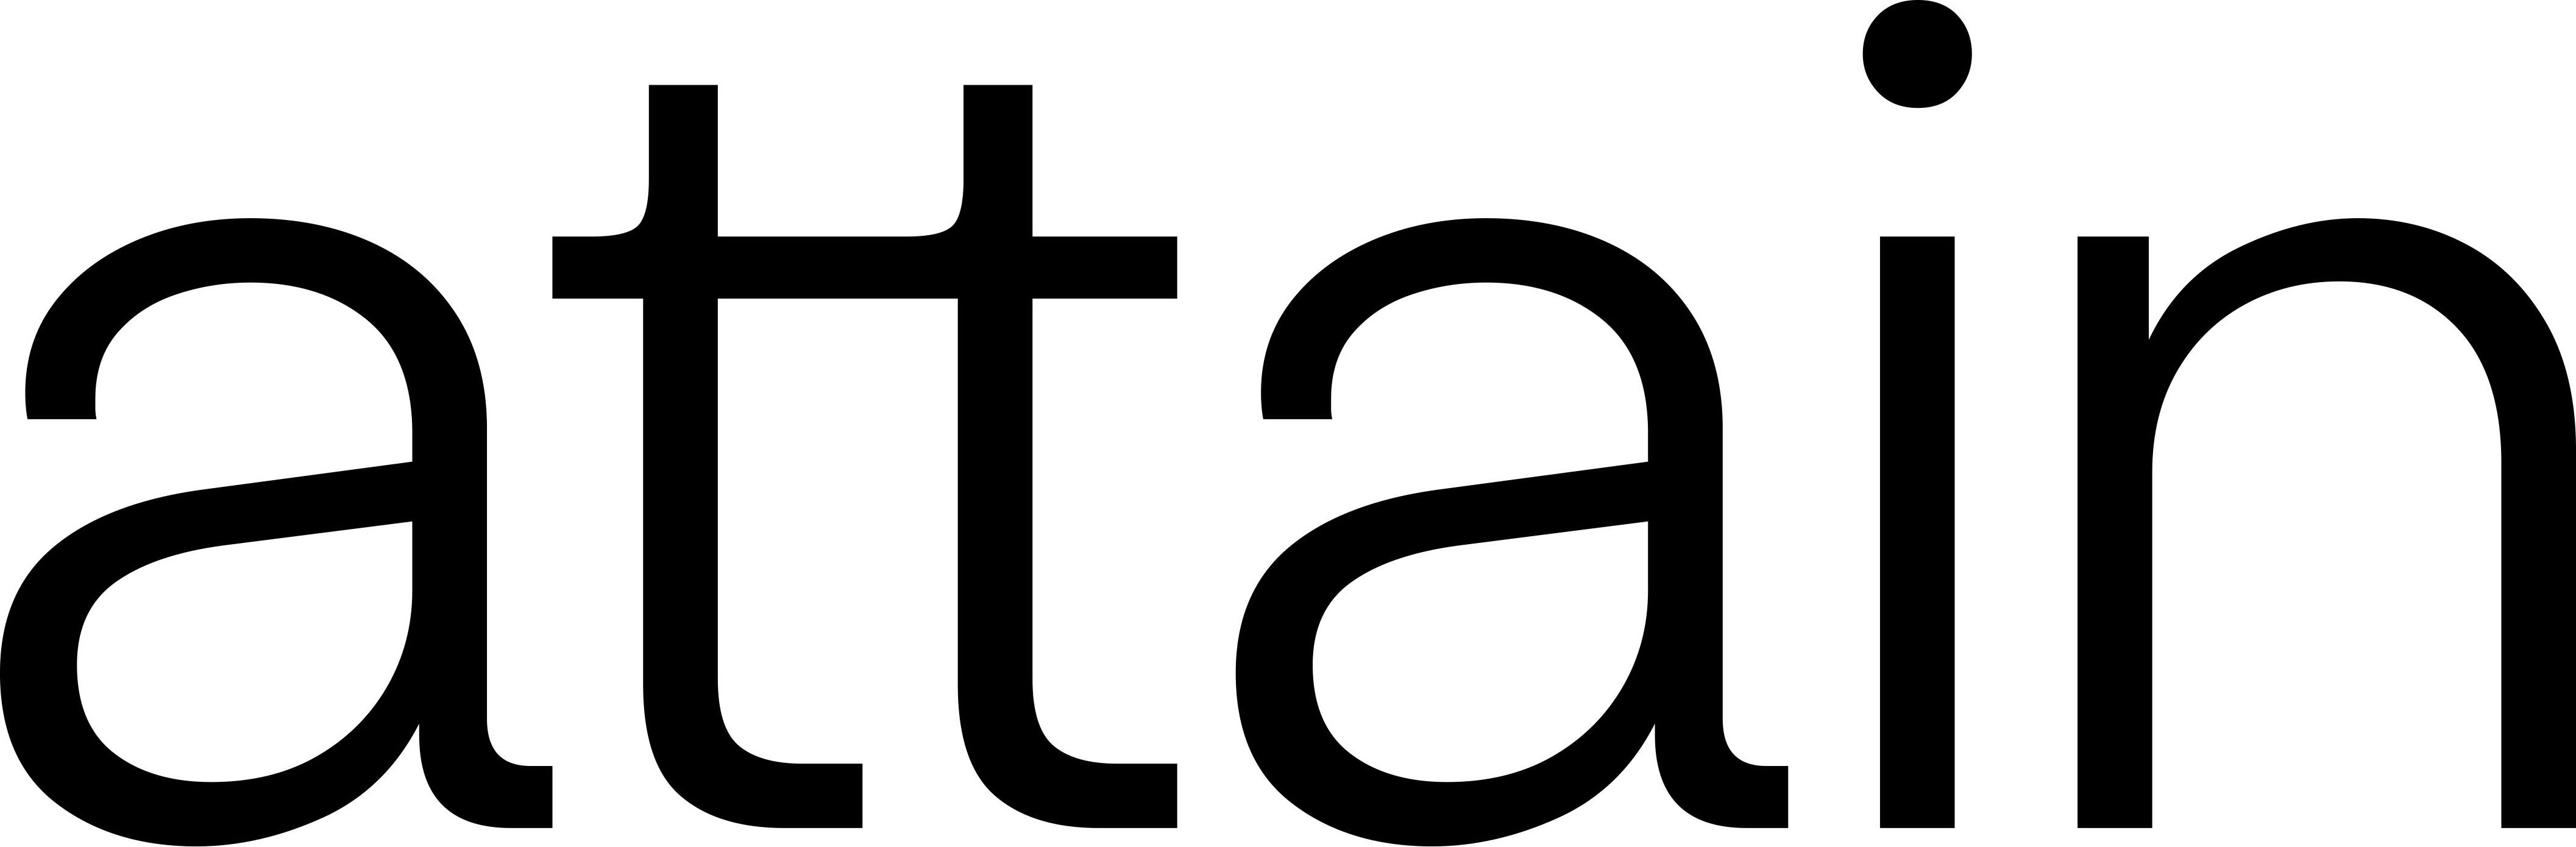 Trademark Logo ATTAIN